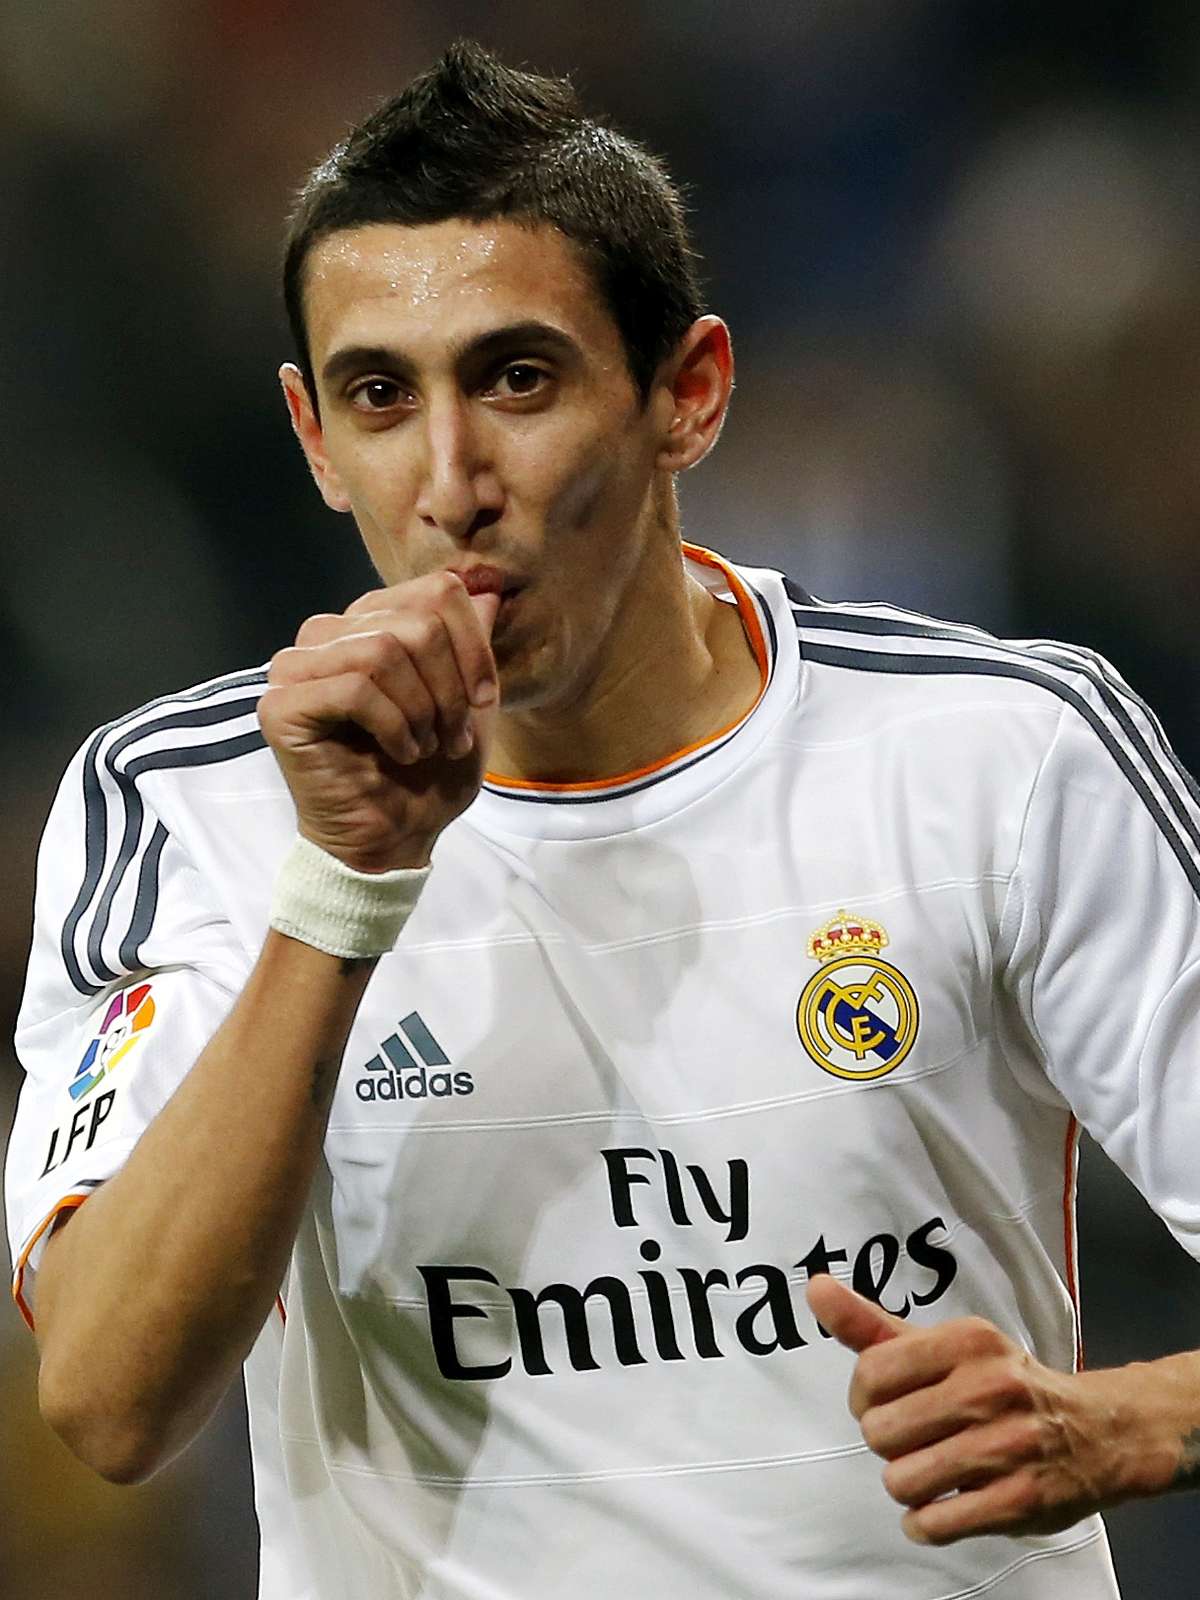 Jogadora explica saída do Real Madrid e aponta o dedo ao clube